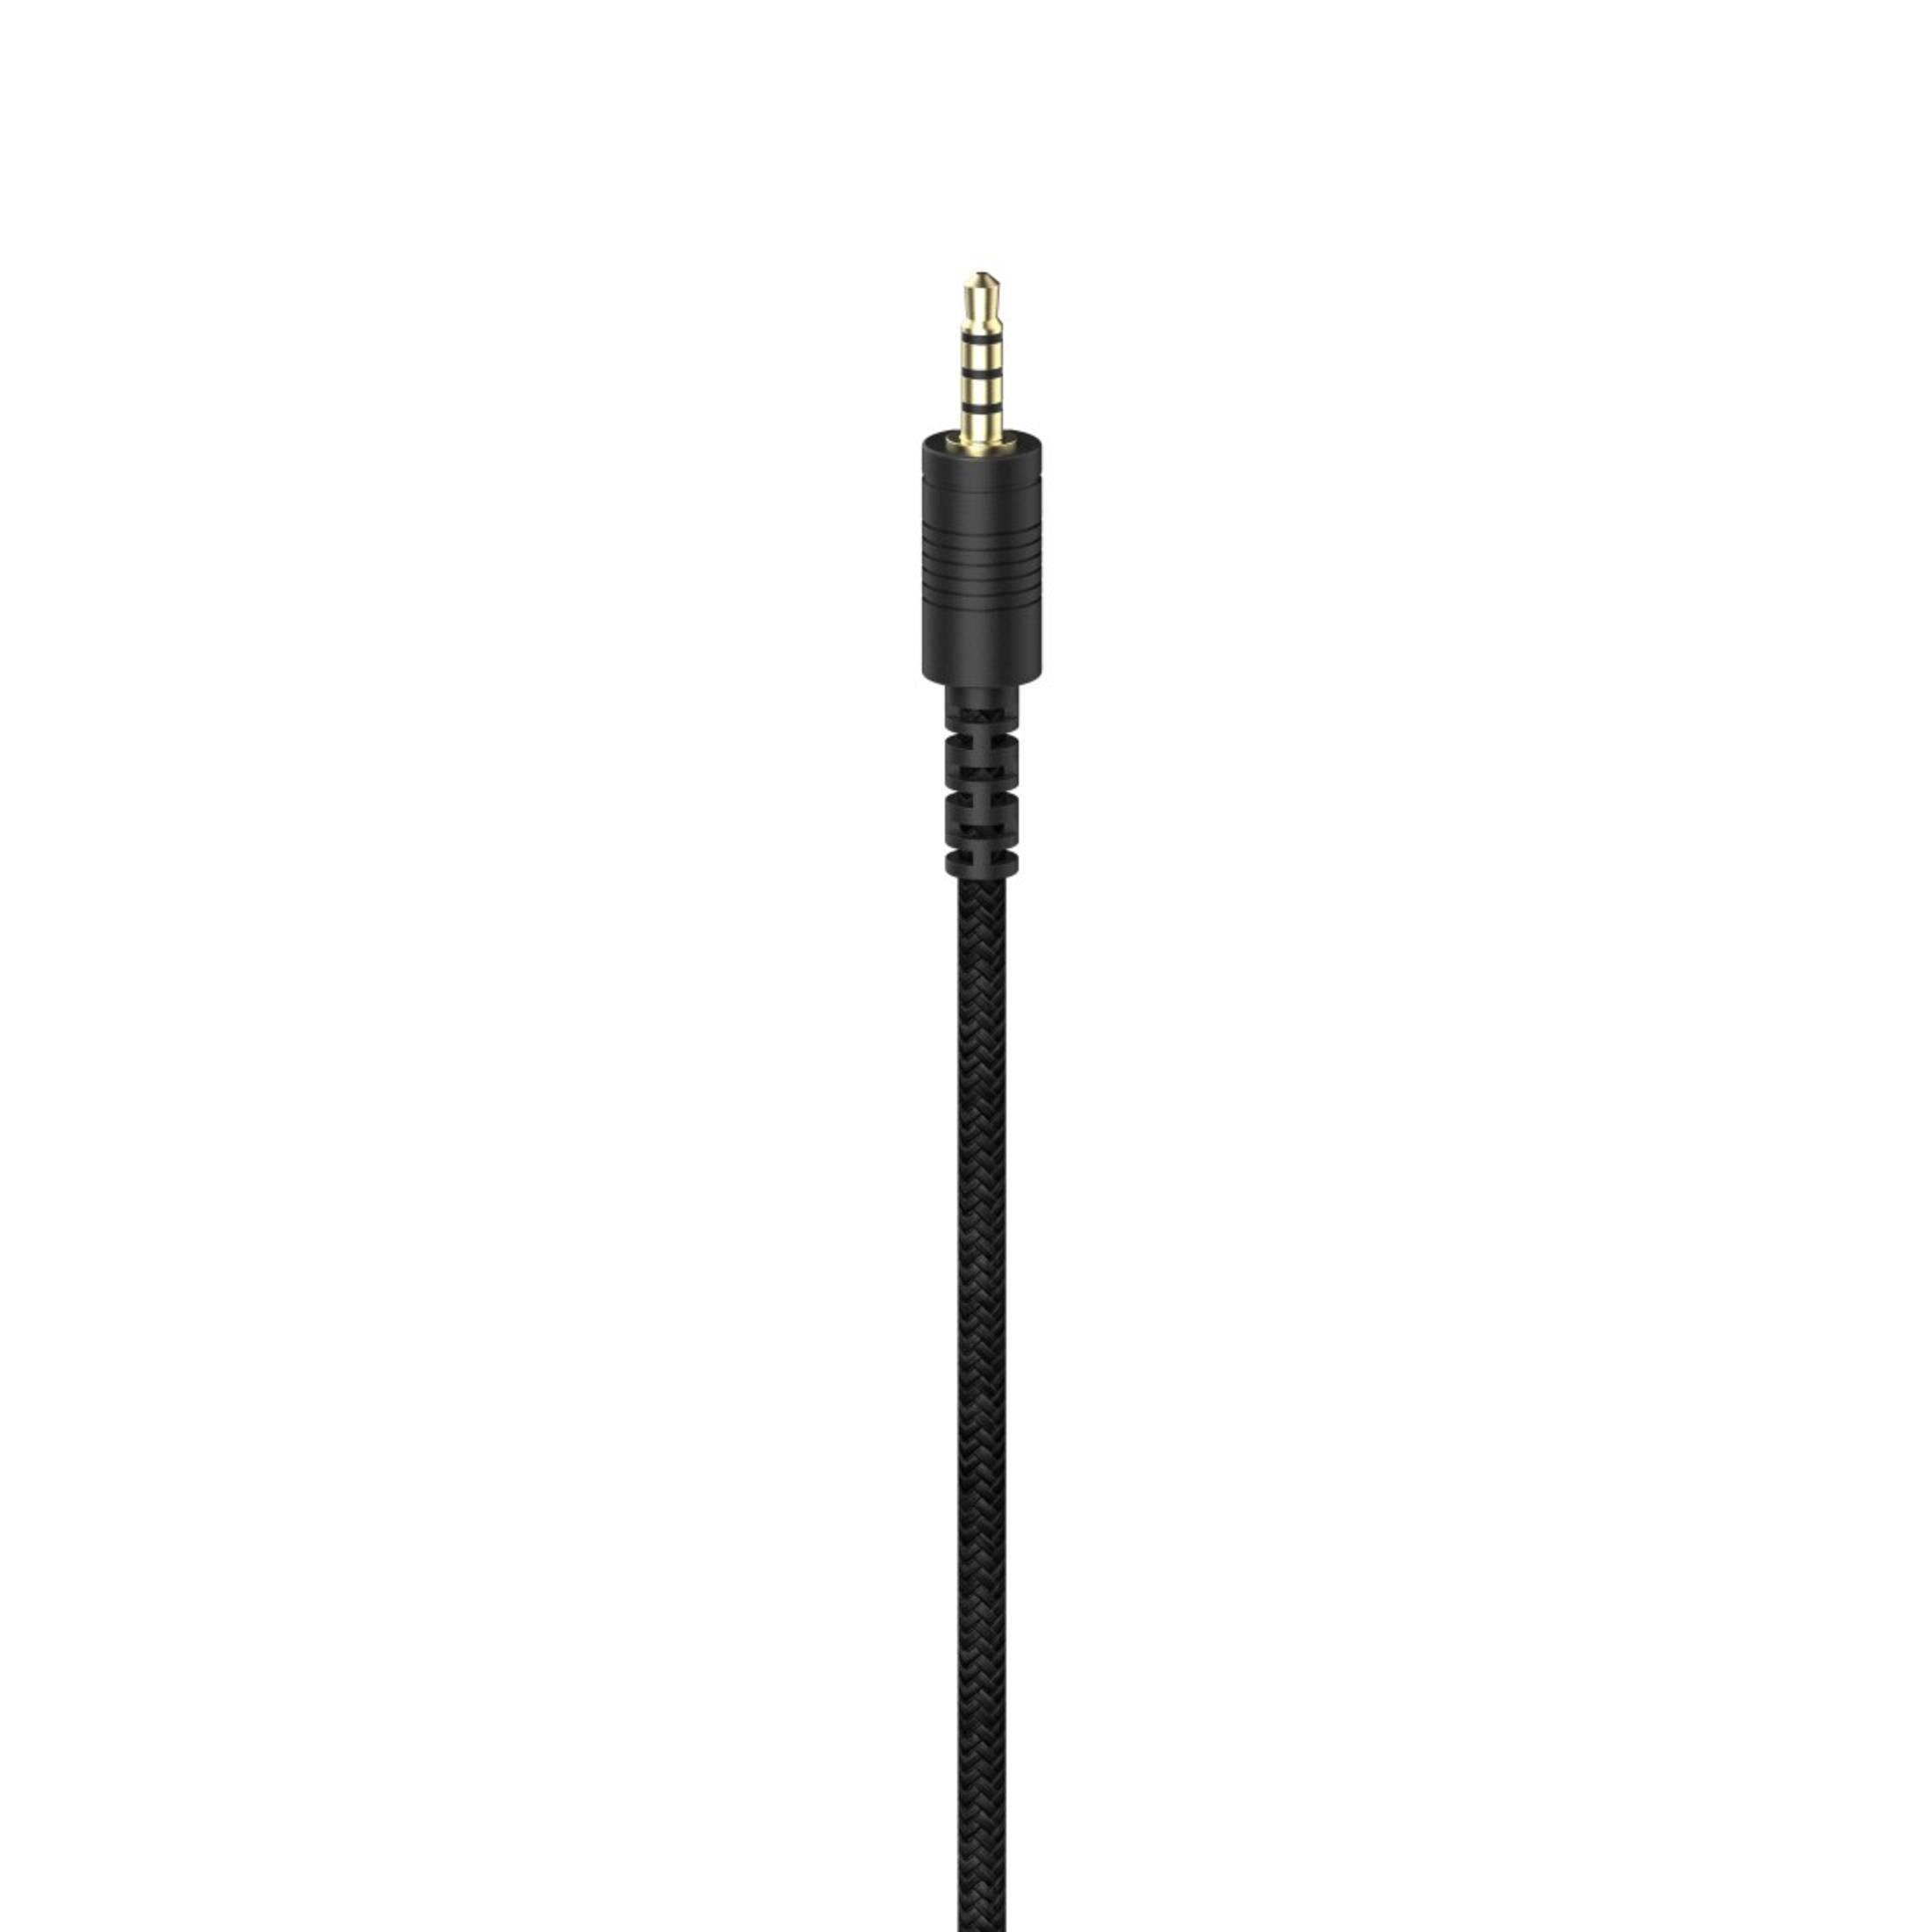 URAGE SoundZ 900 DAC, Blau/Schwarz Over-ear Headset